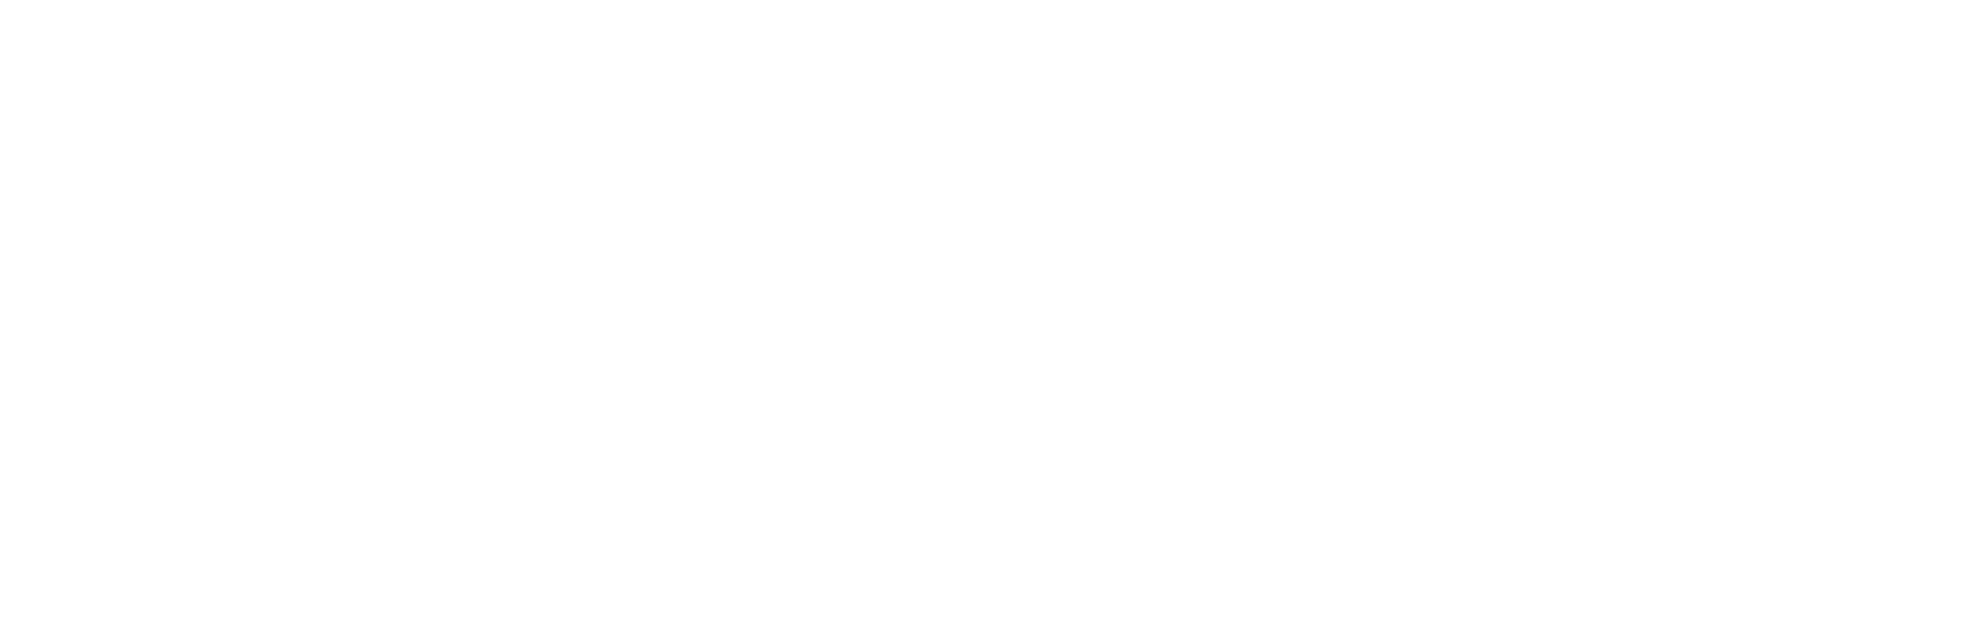 forge distribution white logo